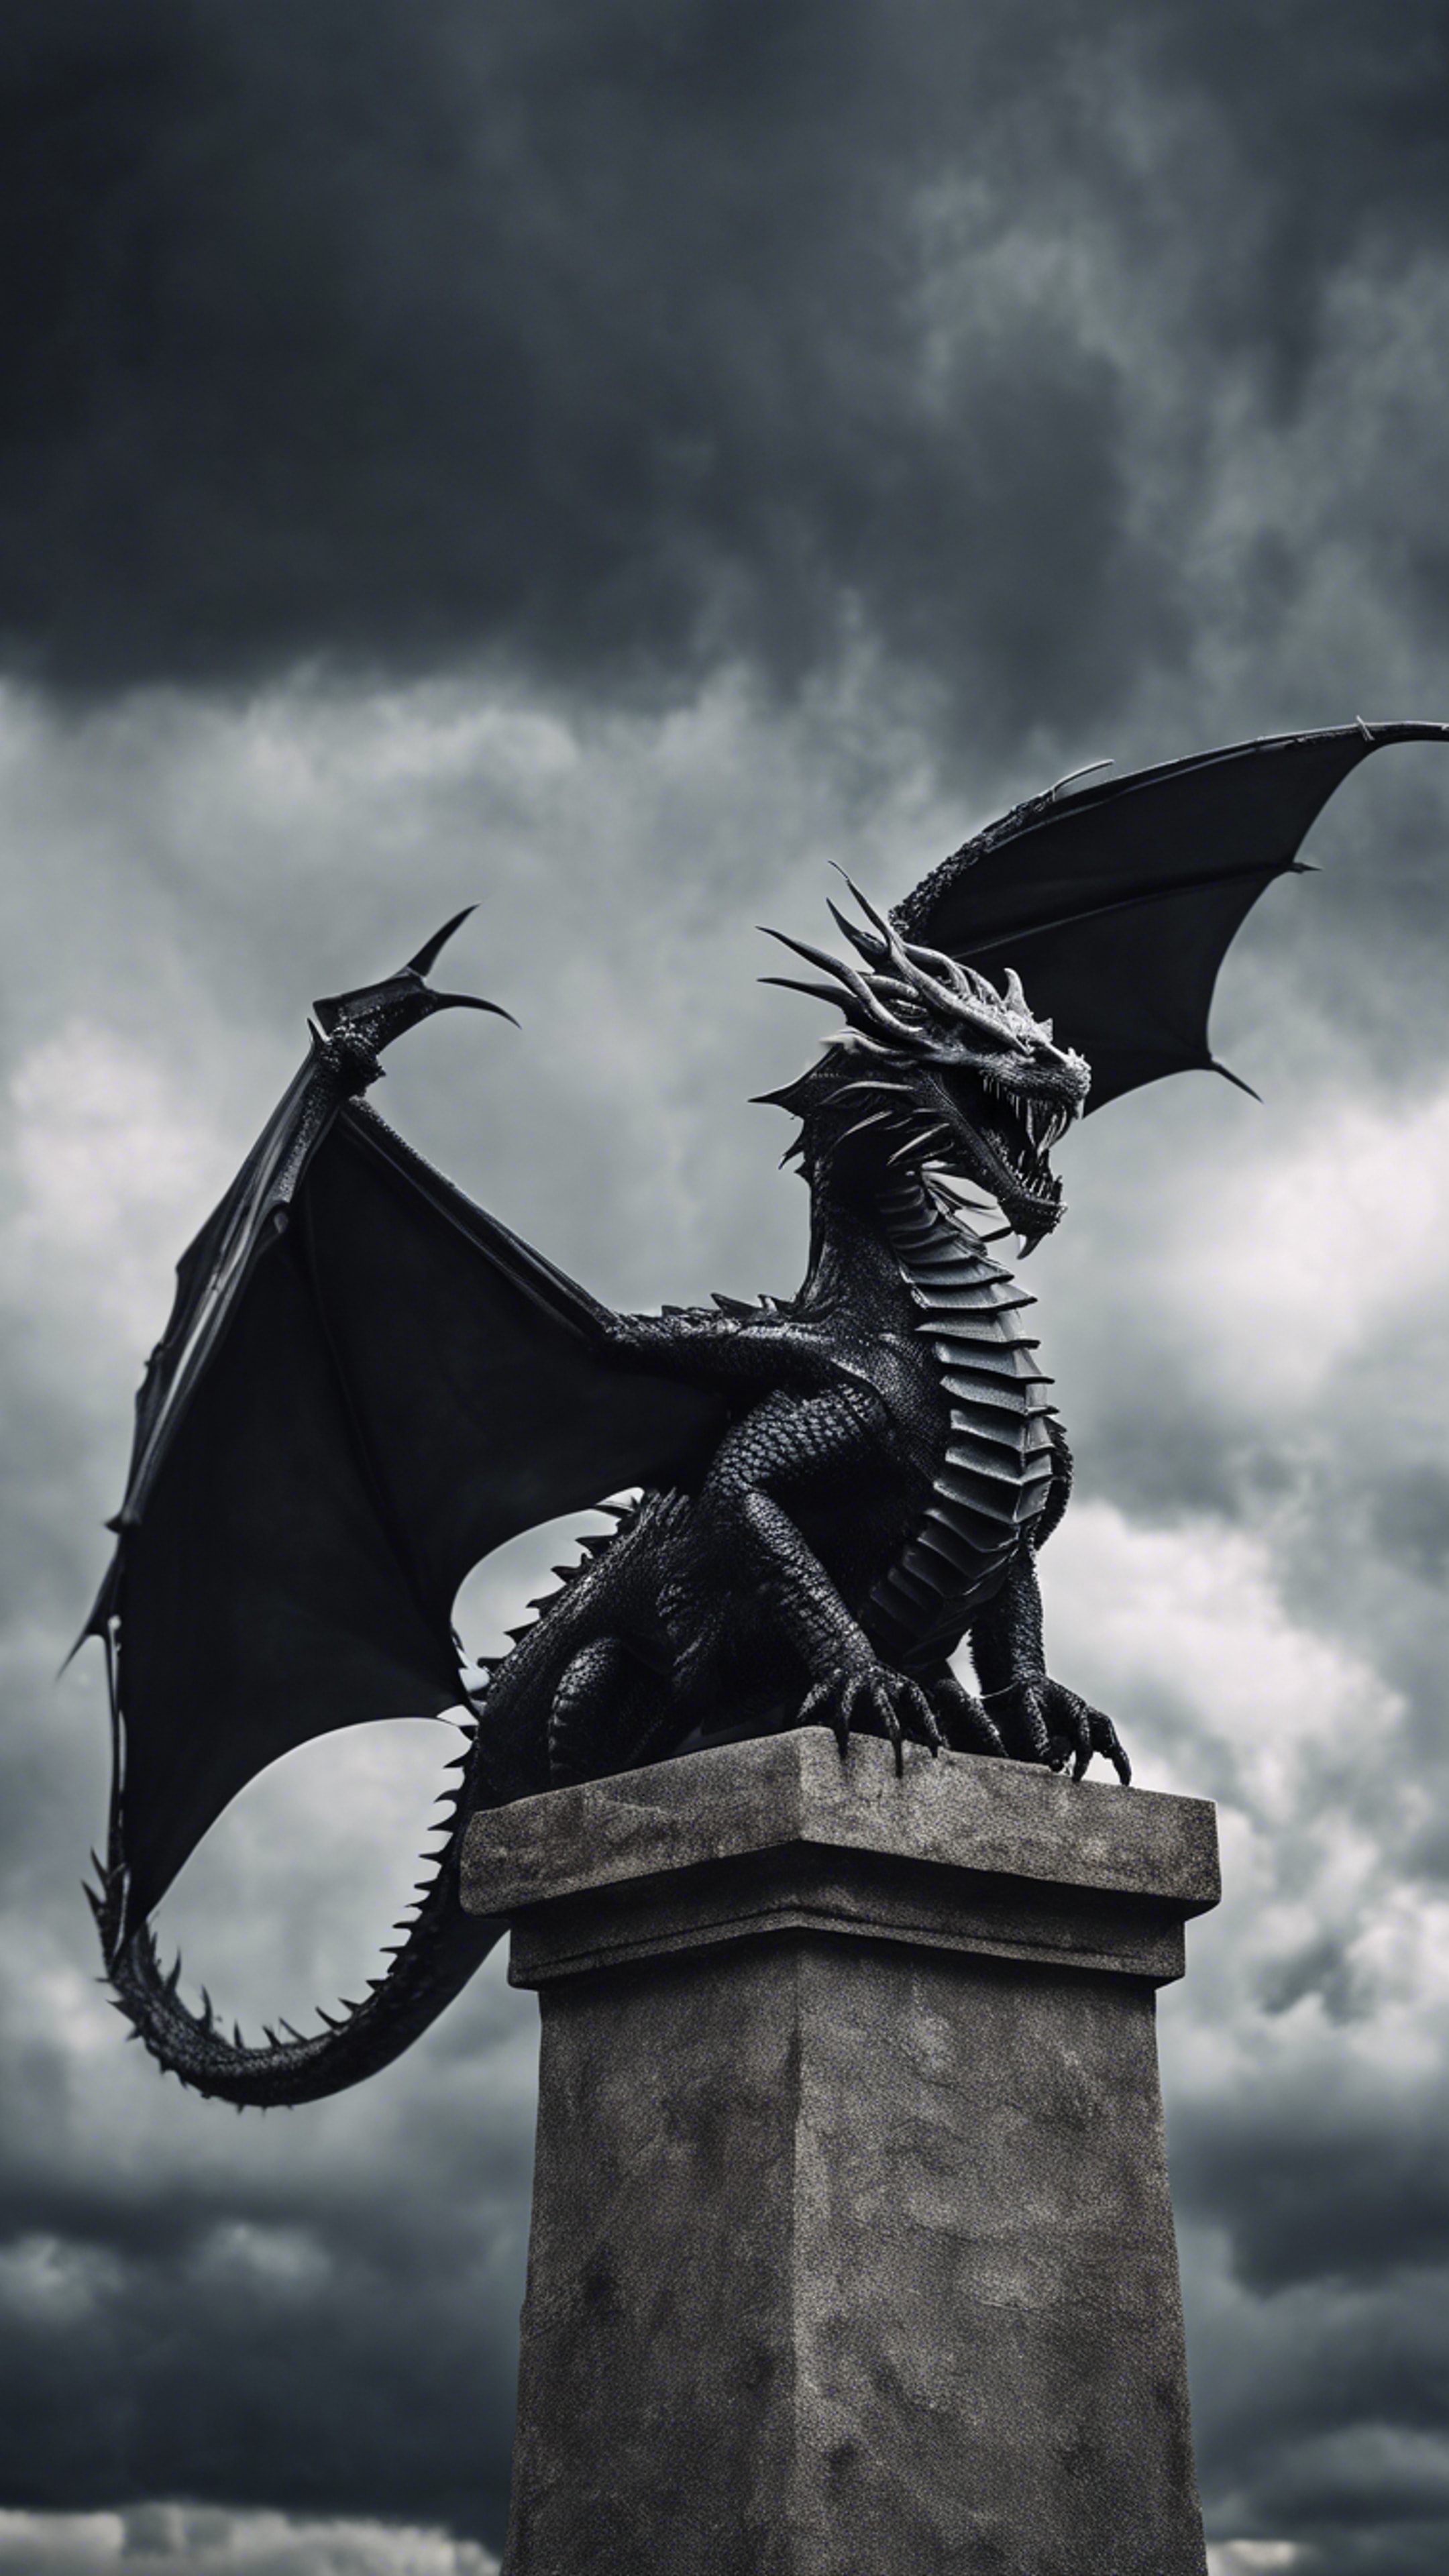 A gothic-style, black iron dragon flying amidst stormy, dark clouds. ورق الجدران[aebeaee8cf654a26baba]